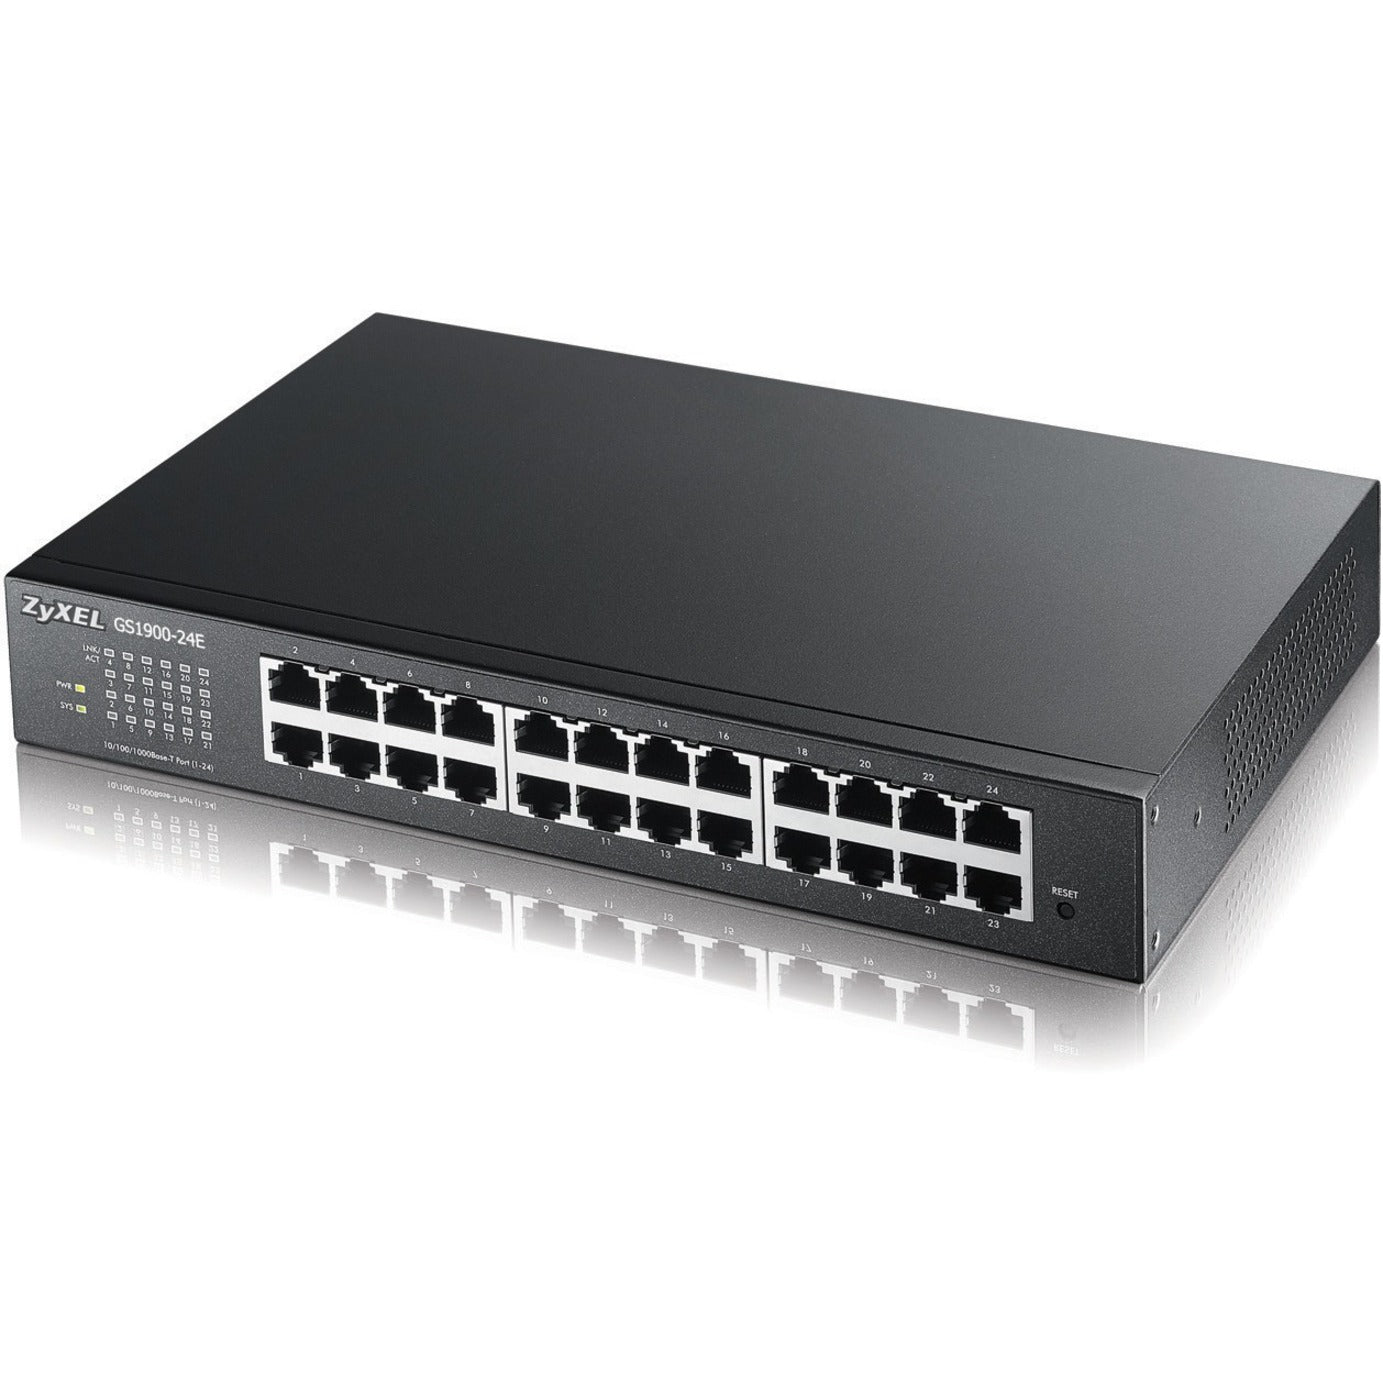 ZYXEL GS1900-24E 24-Port GbE Smart Managed Switch, Gigabit Ethernet Network, VLAN, QoS, SNMP, RMON, Syslog